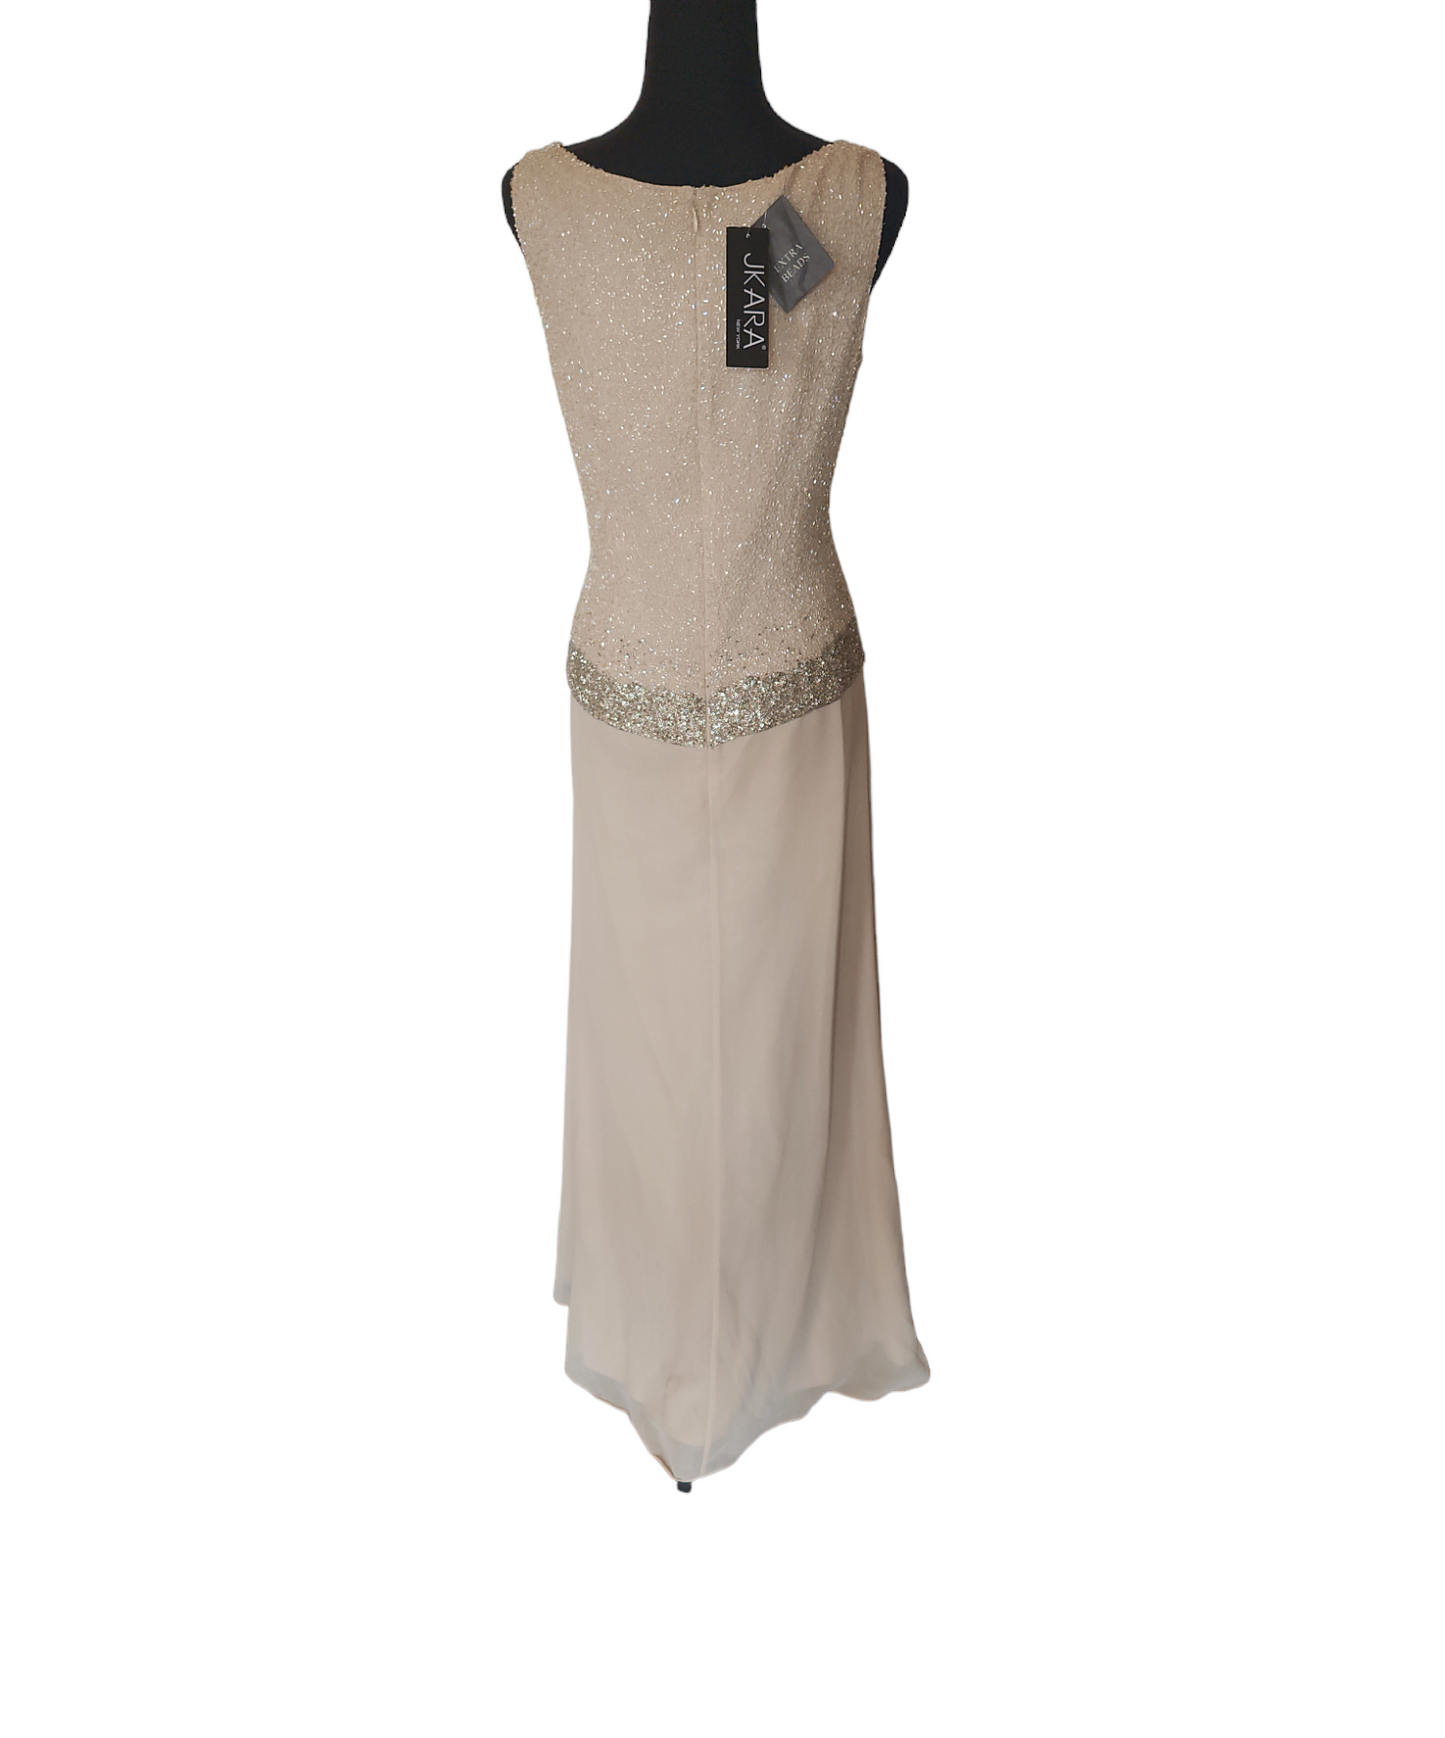 (NWT) JKARA New York - Formal Champagne Sequin Beaded Top Dress